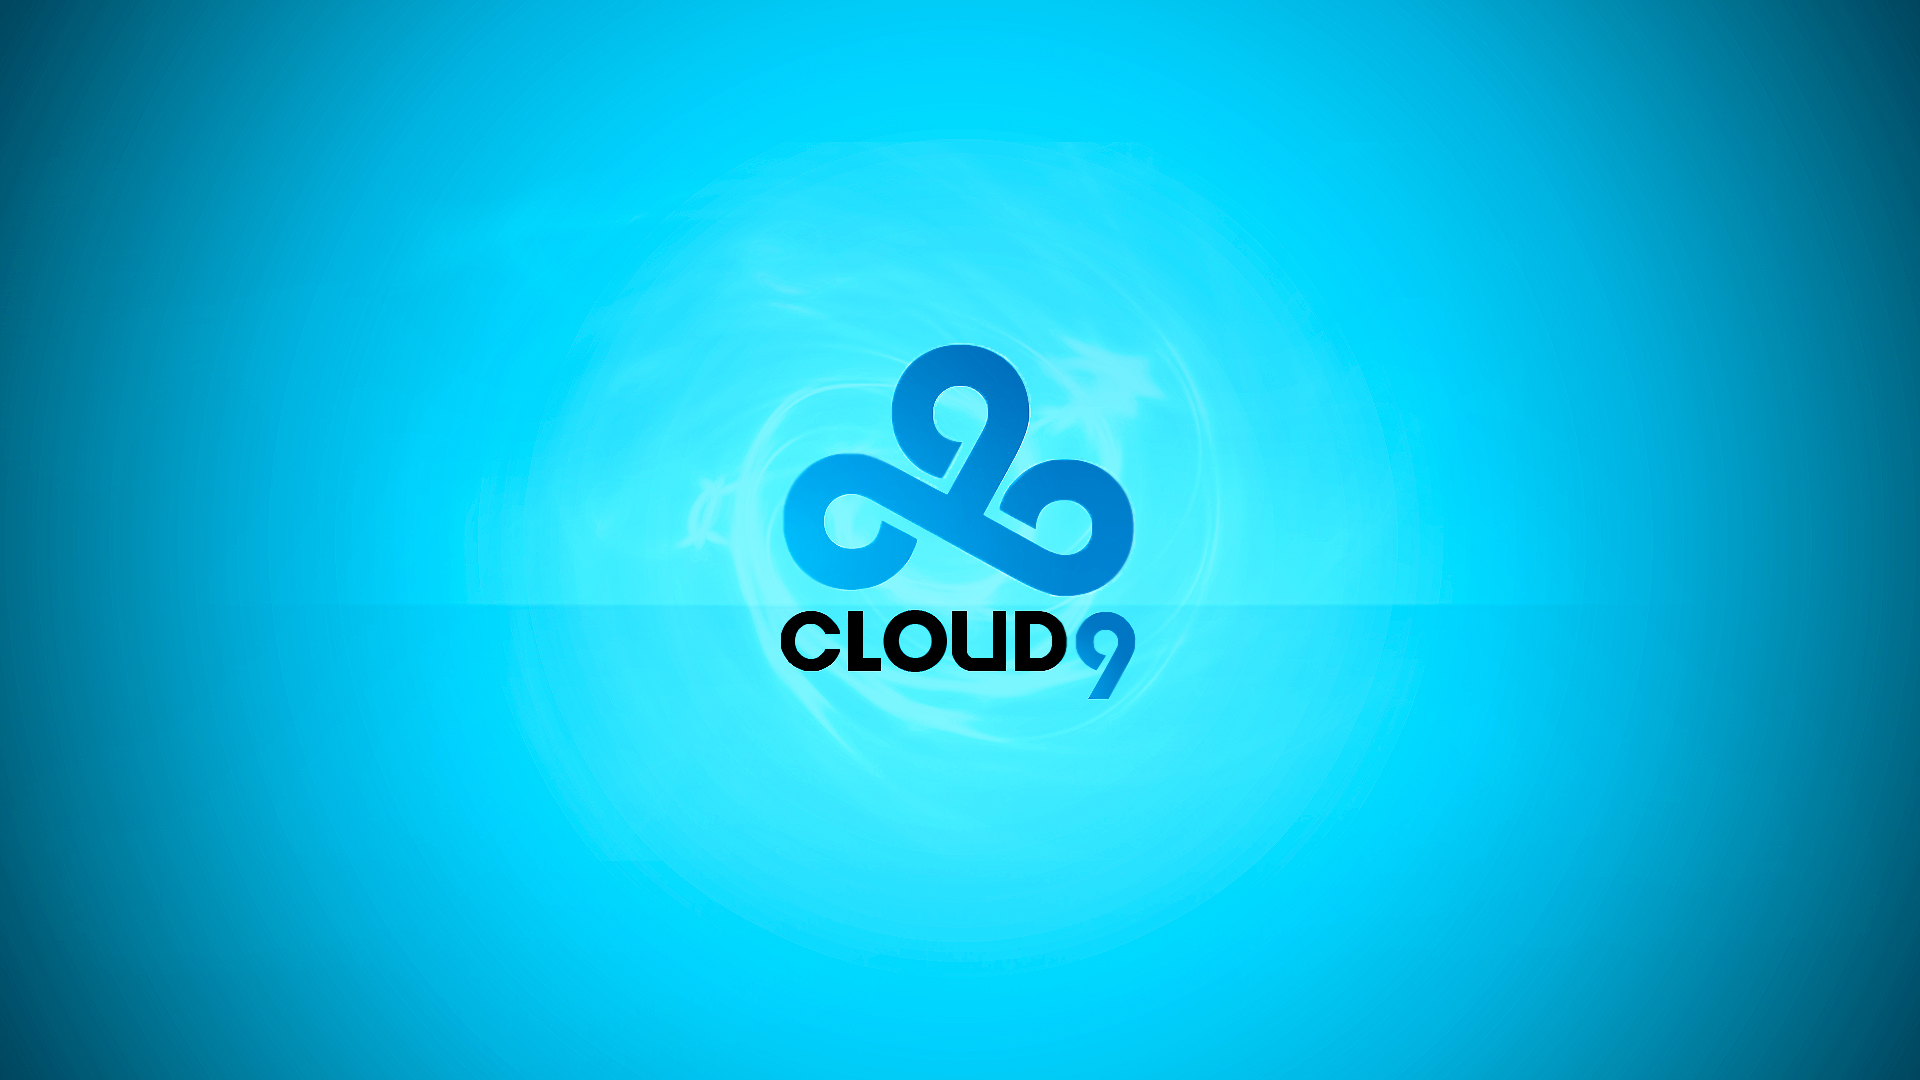 Cloud 9 Lol Wallpapers